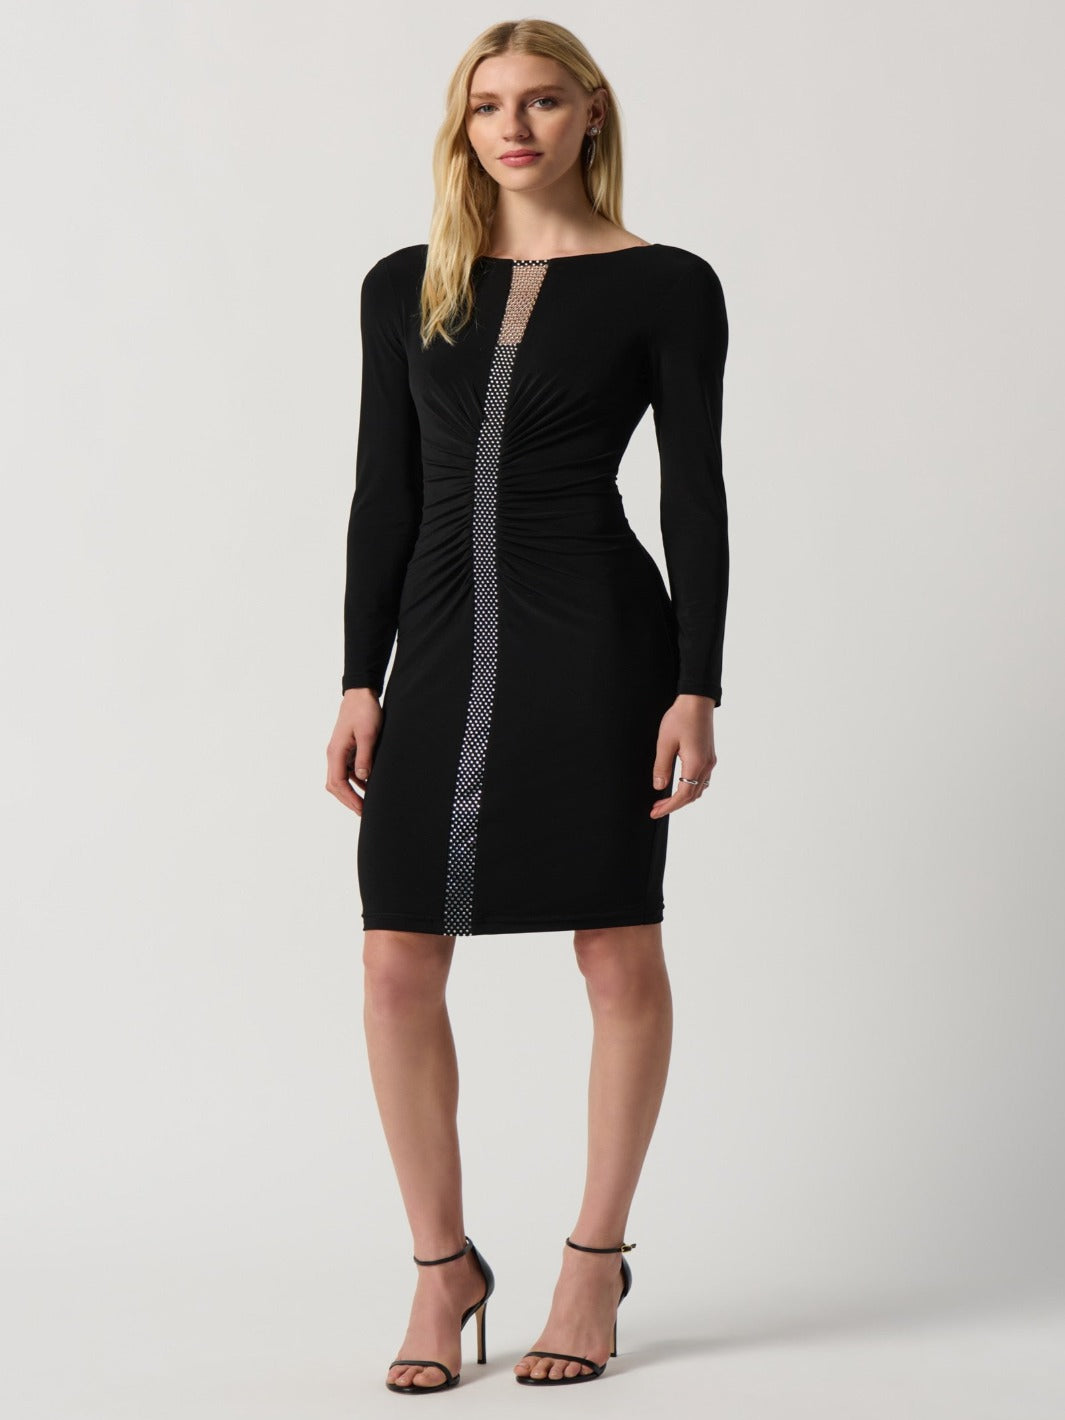 Joseph Ribkoff - Long Sleeved Embellished Dress In Black 234013-Nicola Ross